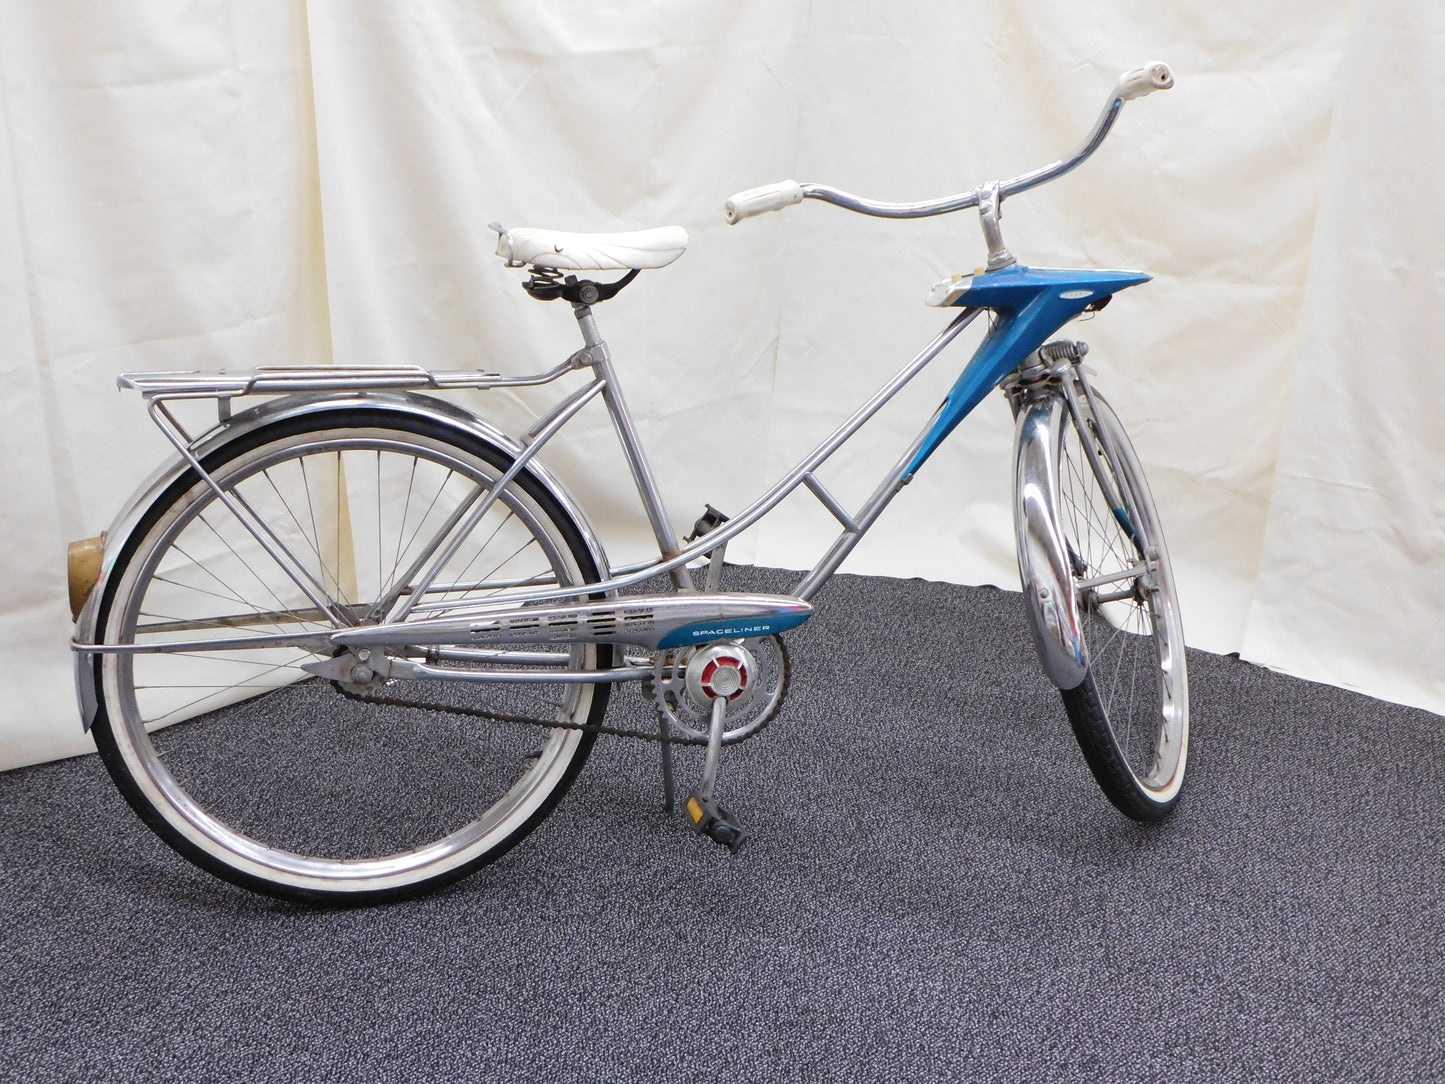 1966 Sears Spaceliner Deluxe Bicycle